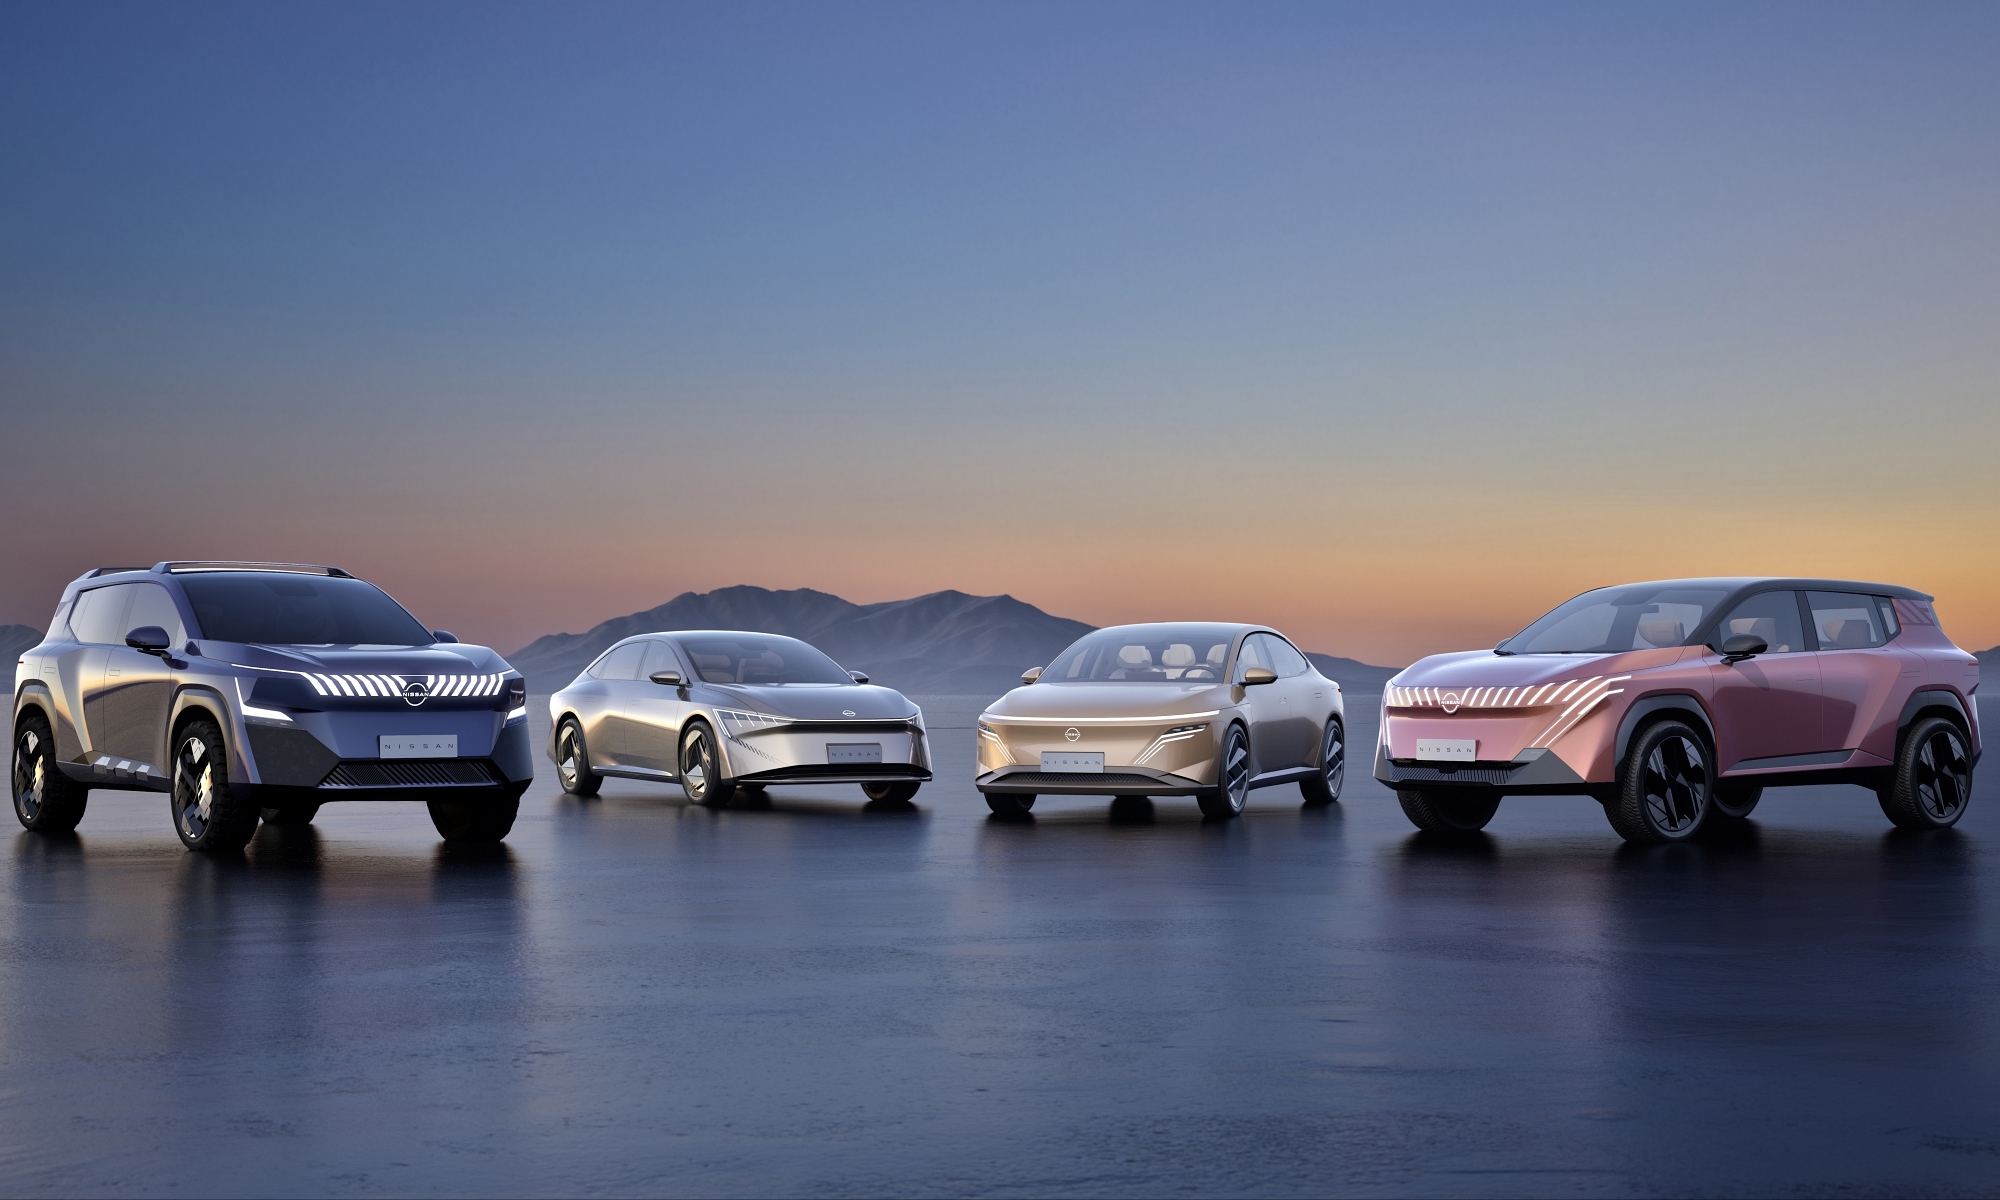 De izquierda a derecha: Nissan Era, Nissan Evo, Nissan Epoch y Nissan Epic.